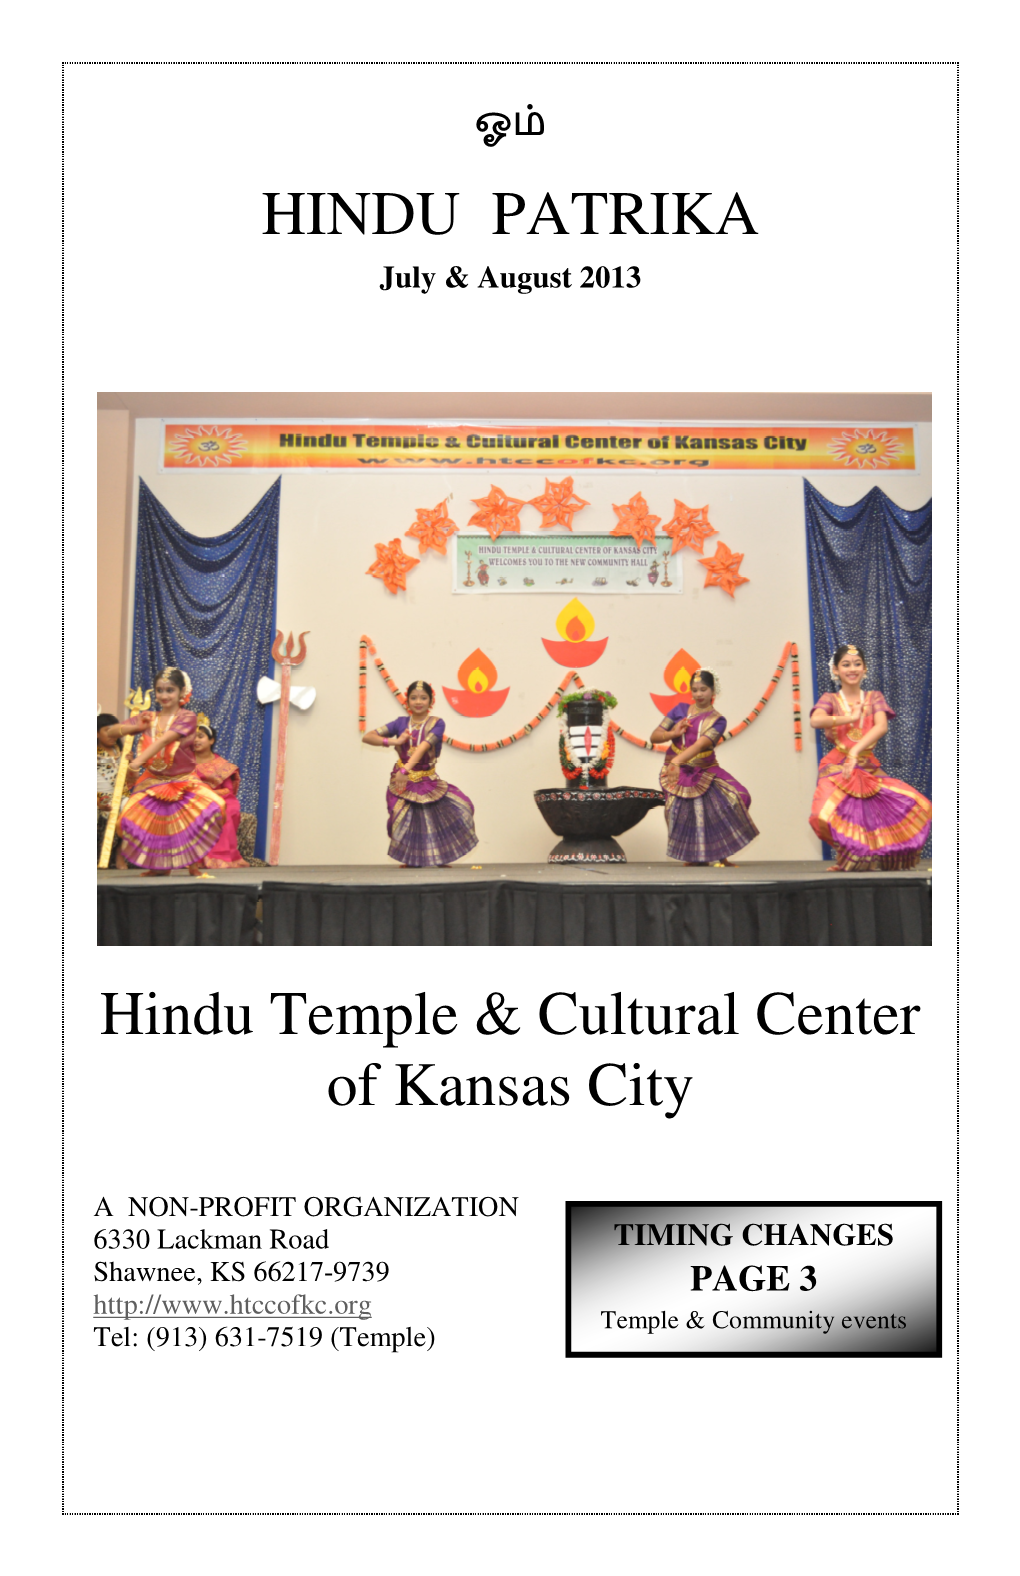 HINDU PATRIKA Hindu Temple & Cultural Center of Kansas City